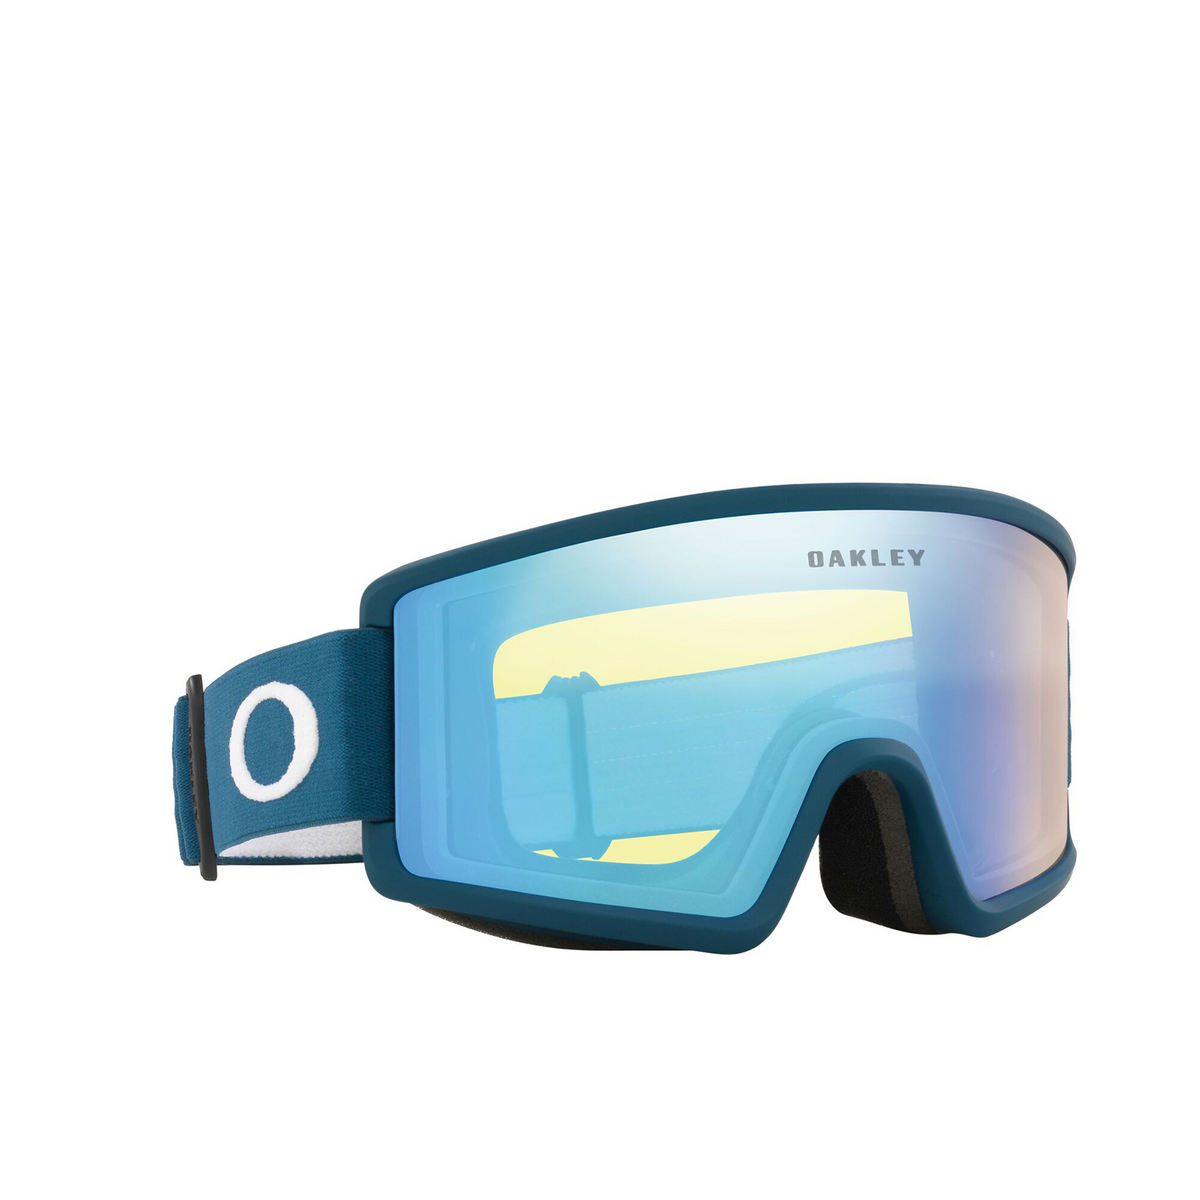 Oakley TARGET LINE L Sunglasses 712010 Poseidon - three-quarters view